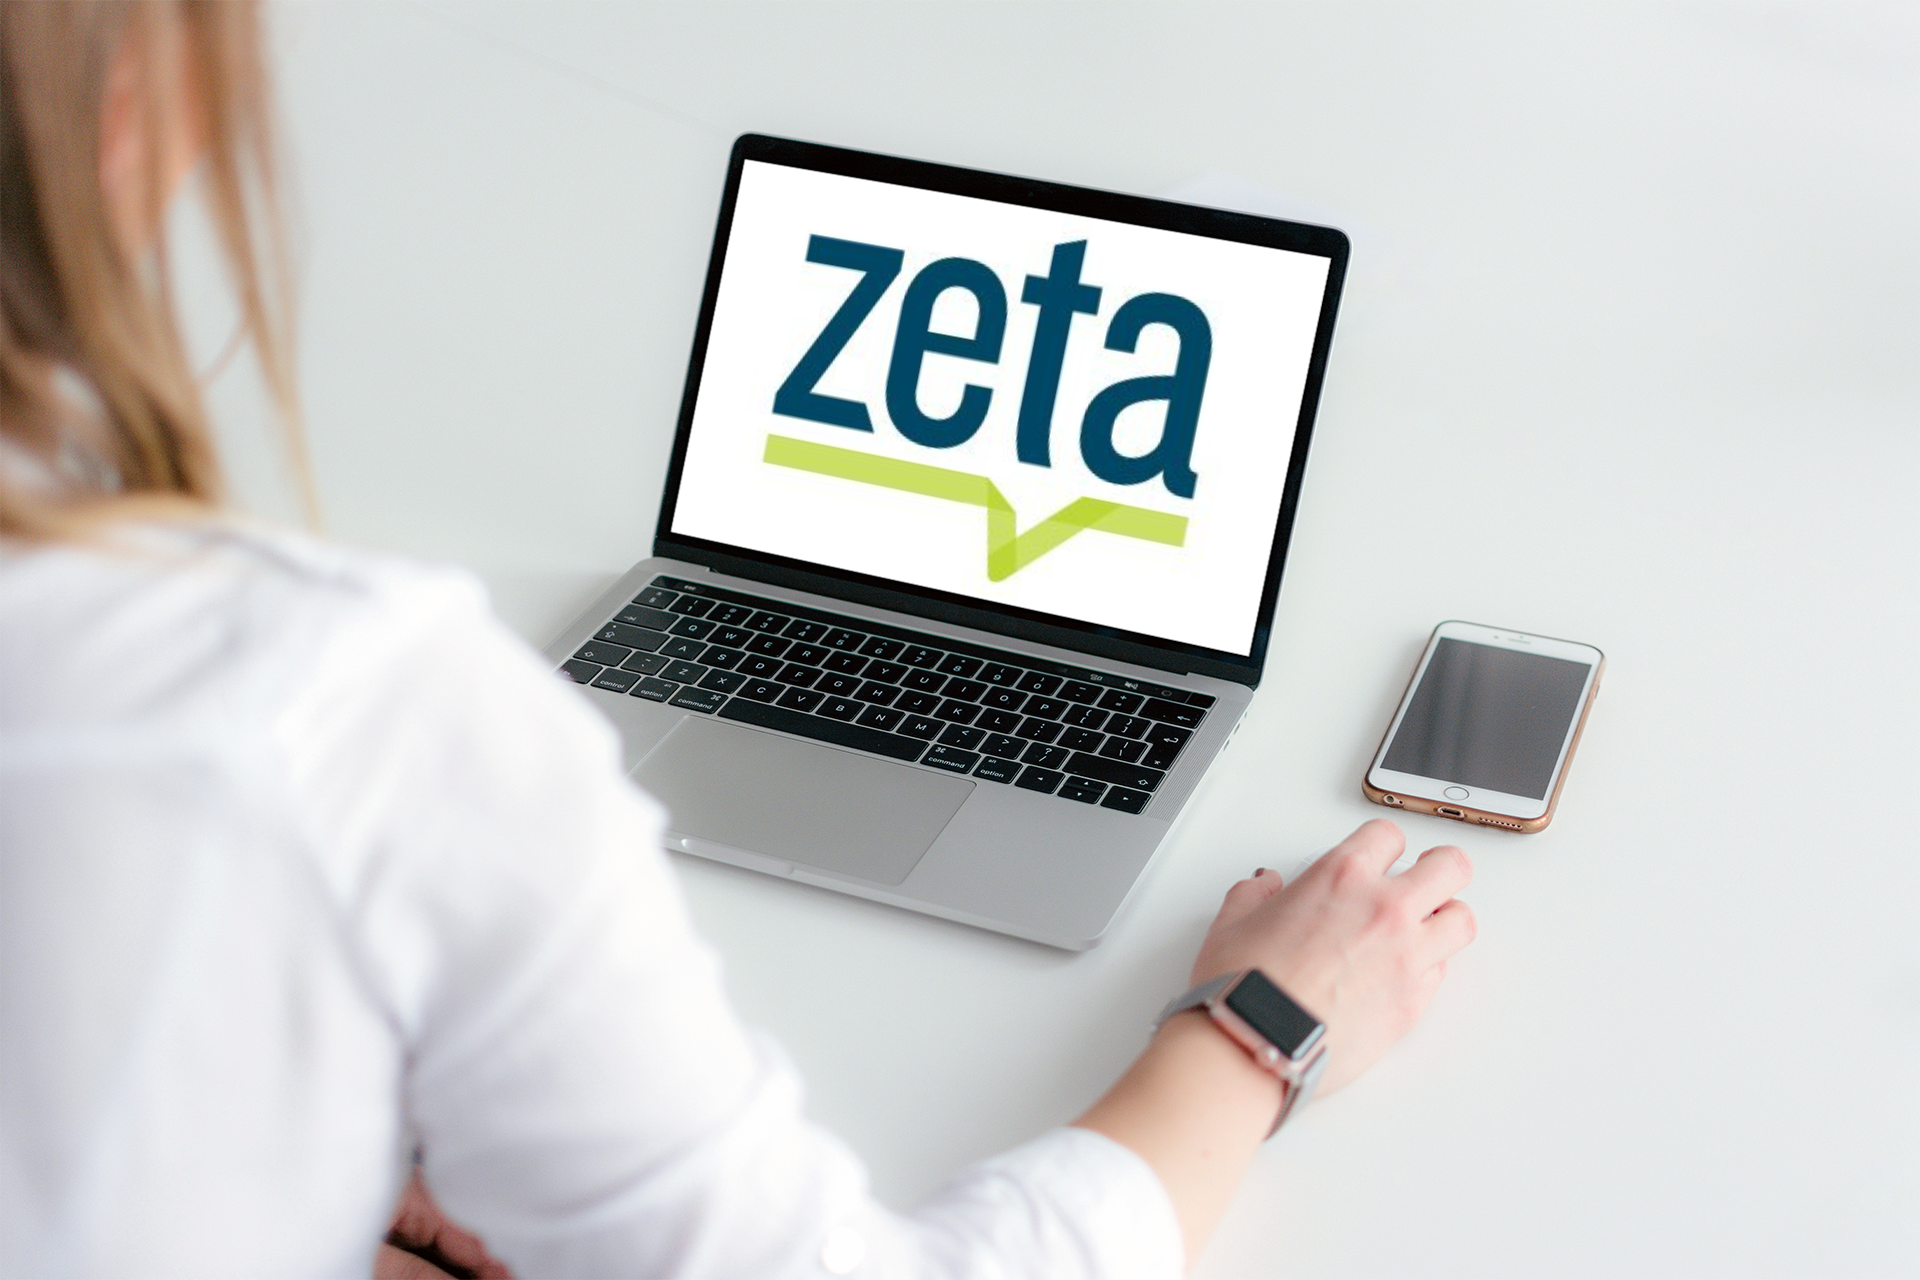 Zeta Global Initial Public Offering